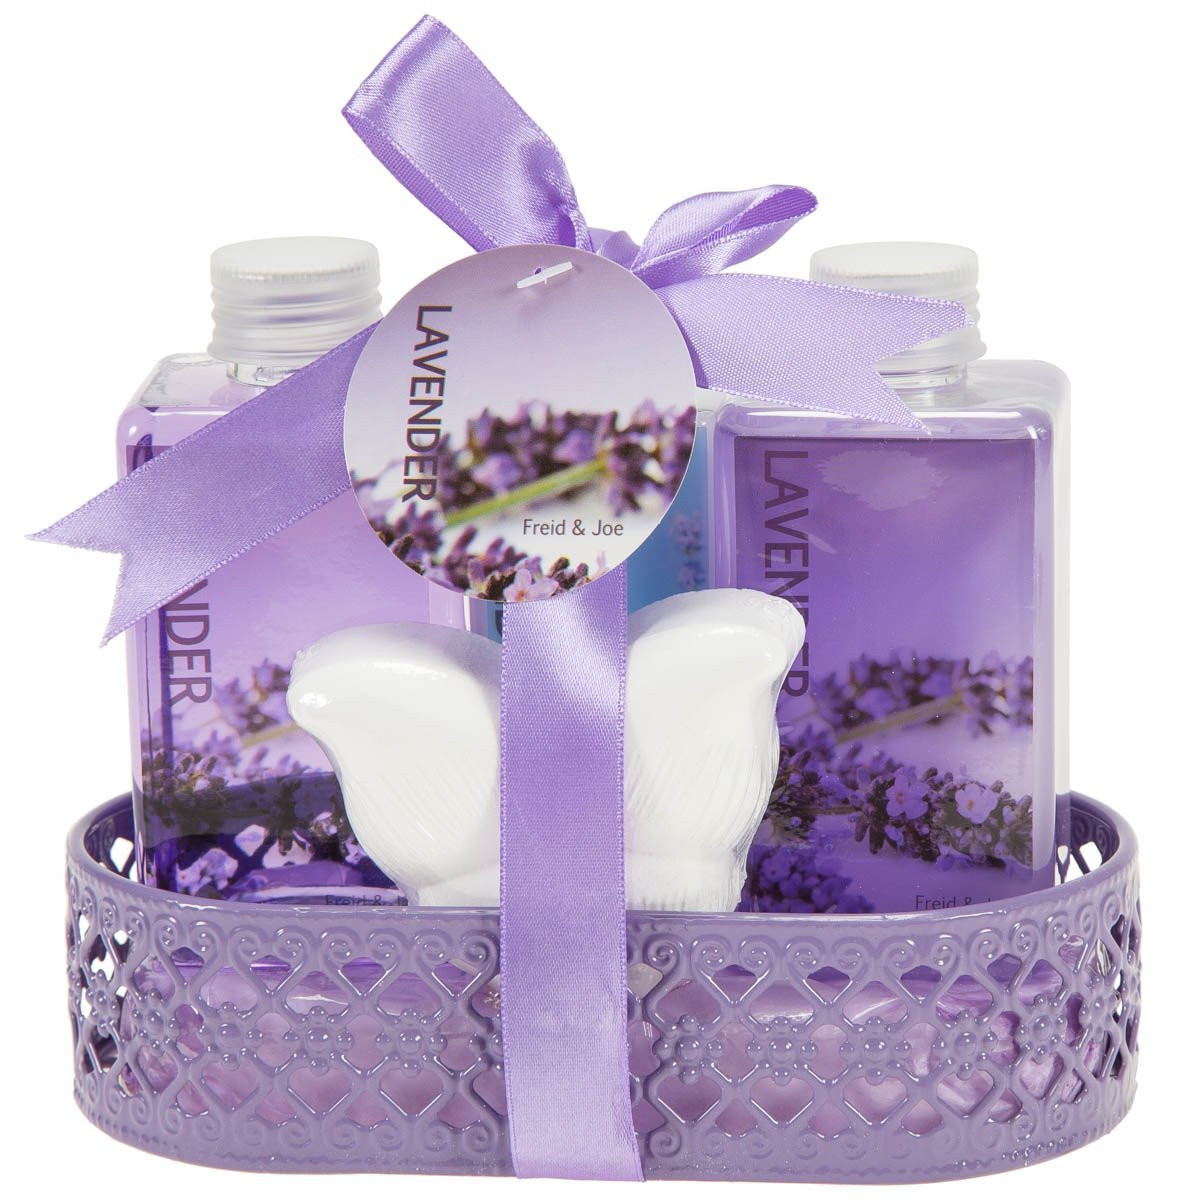 Bath And Body Gift Basket Ideas
 Lavender Bath and Body Gift Basket